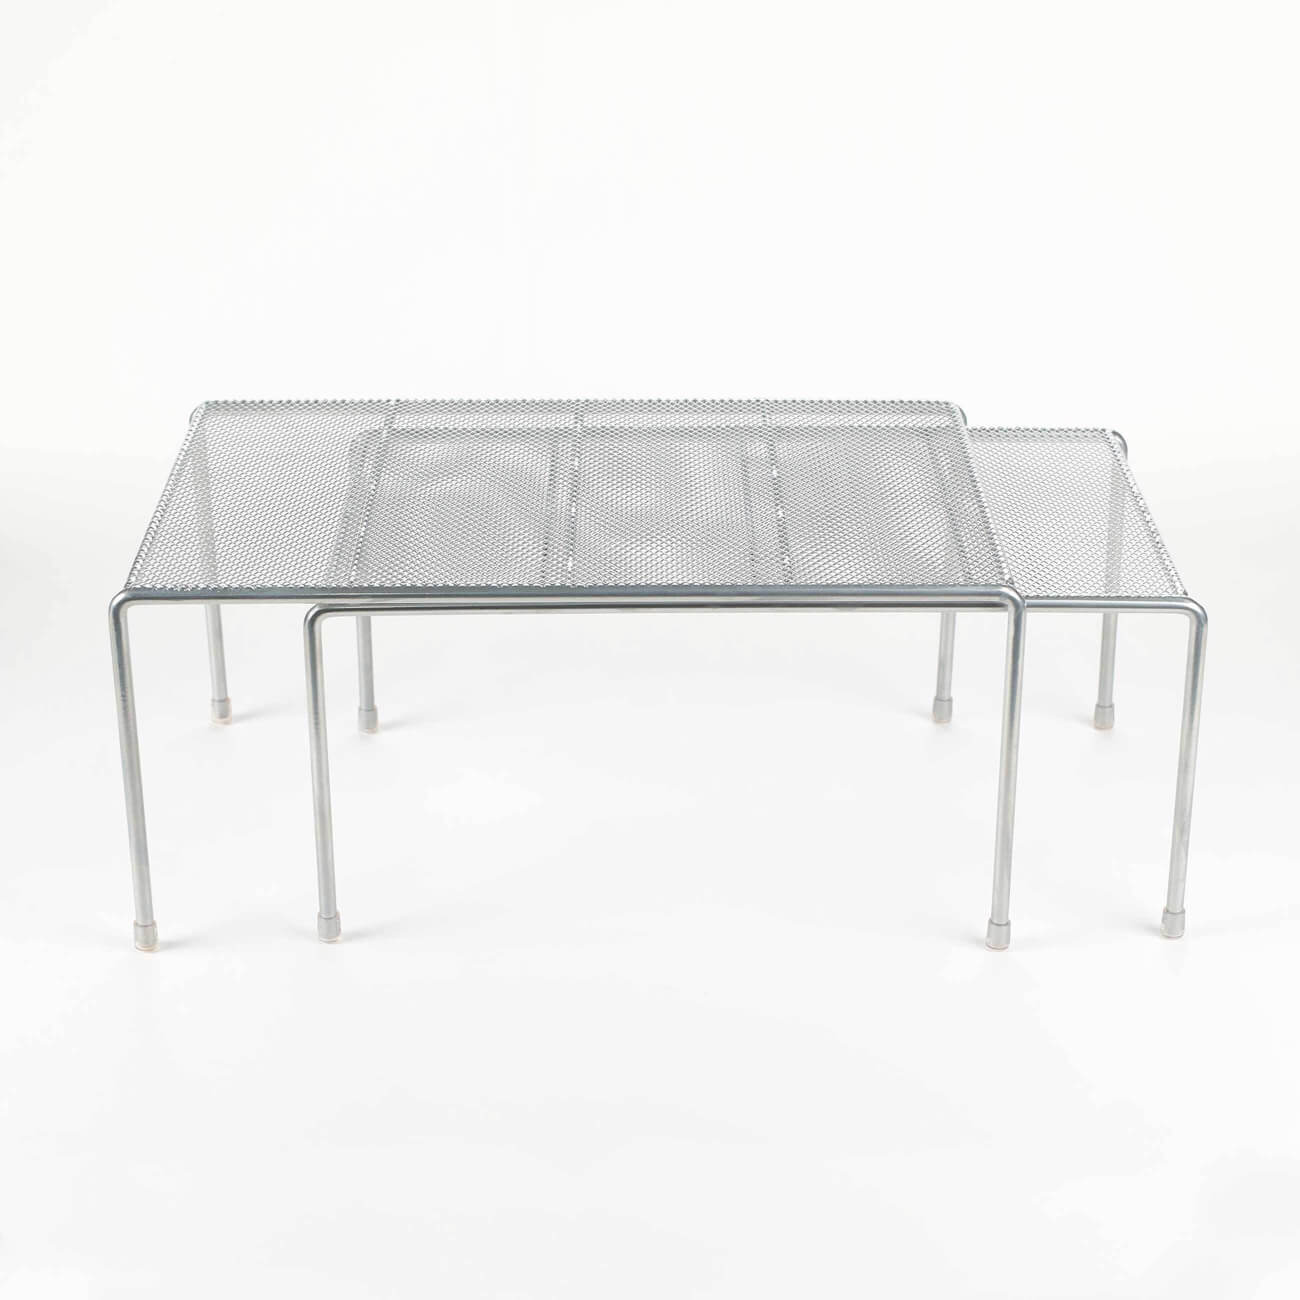 Полка-органайзер для шкафа, 35х23/33x20 см, раздвижная, металл, Сетка, Method